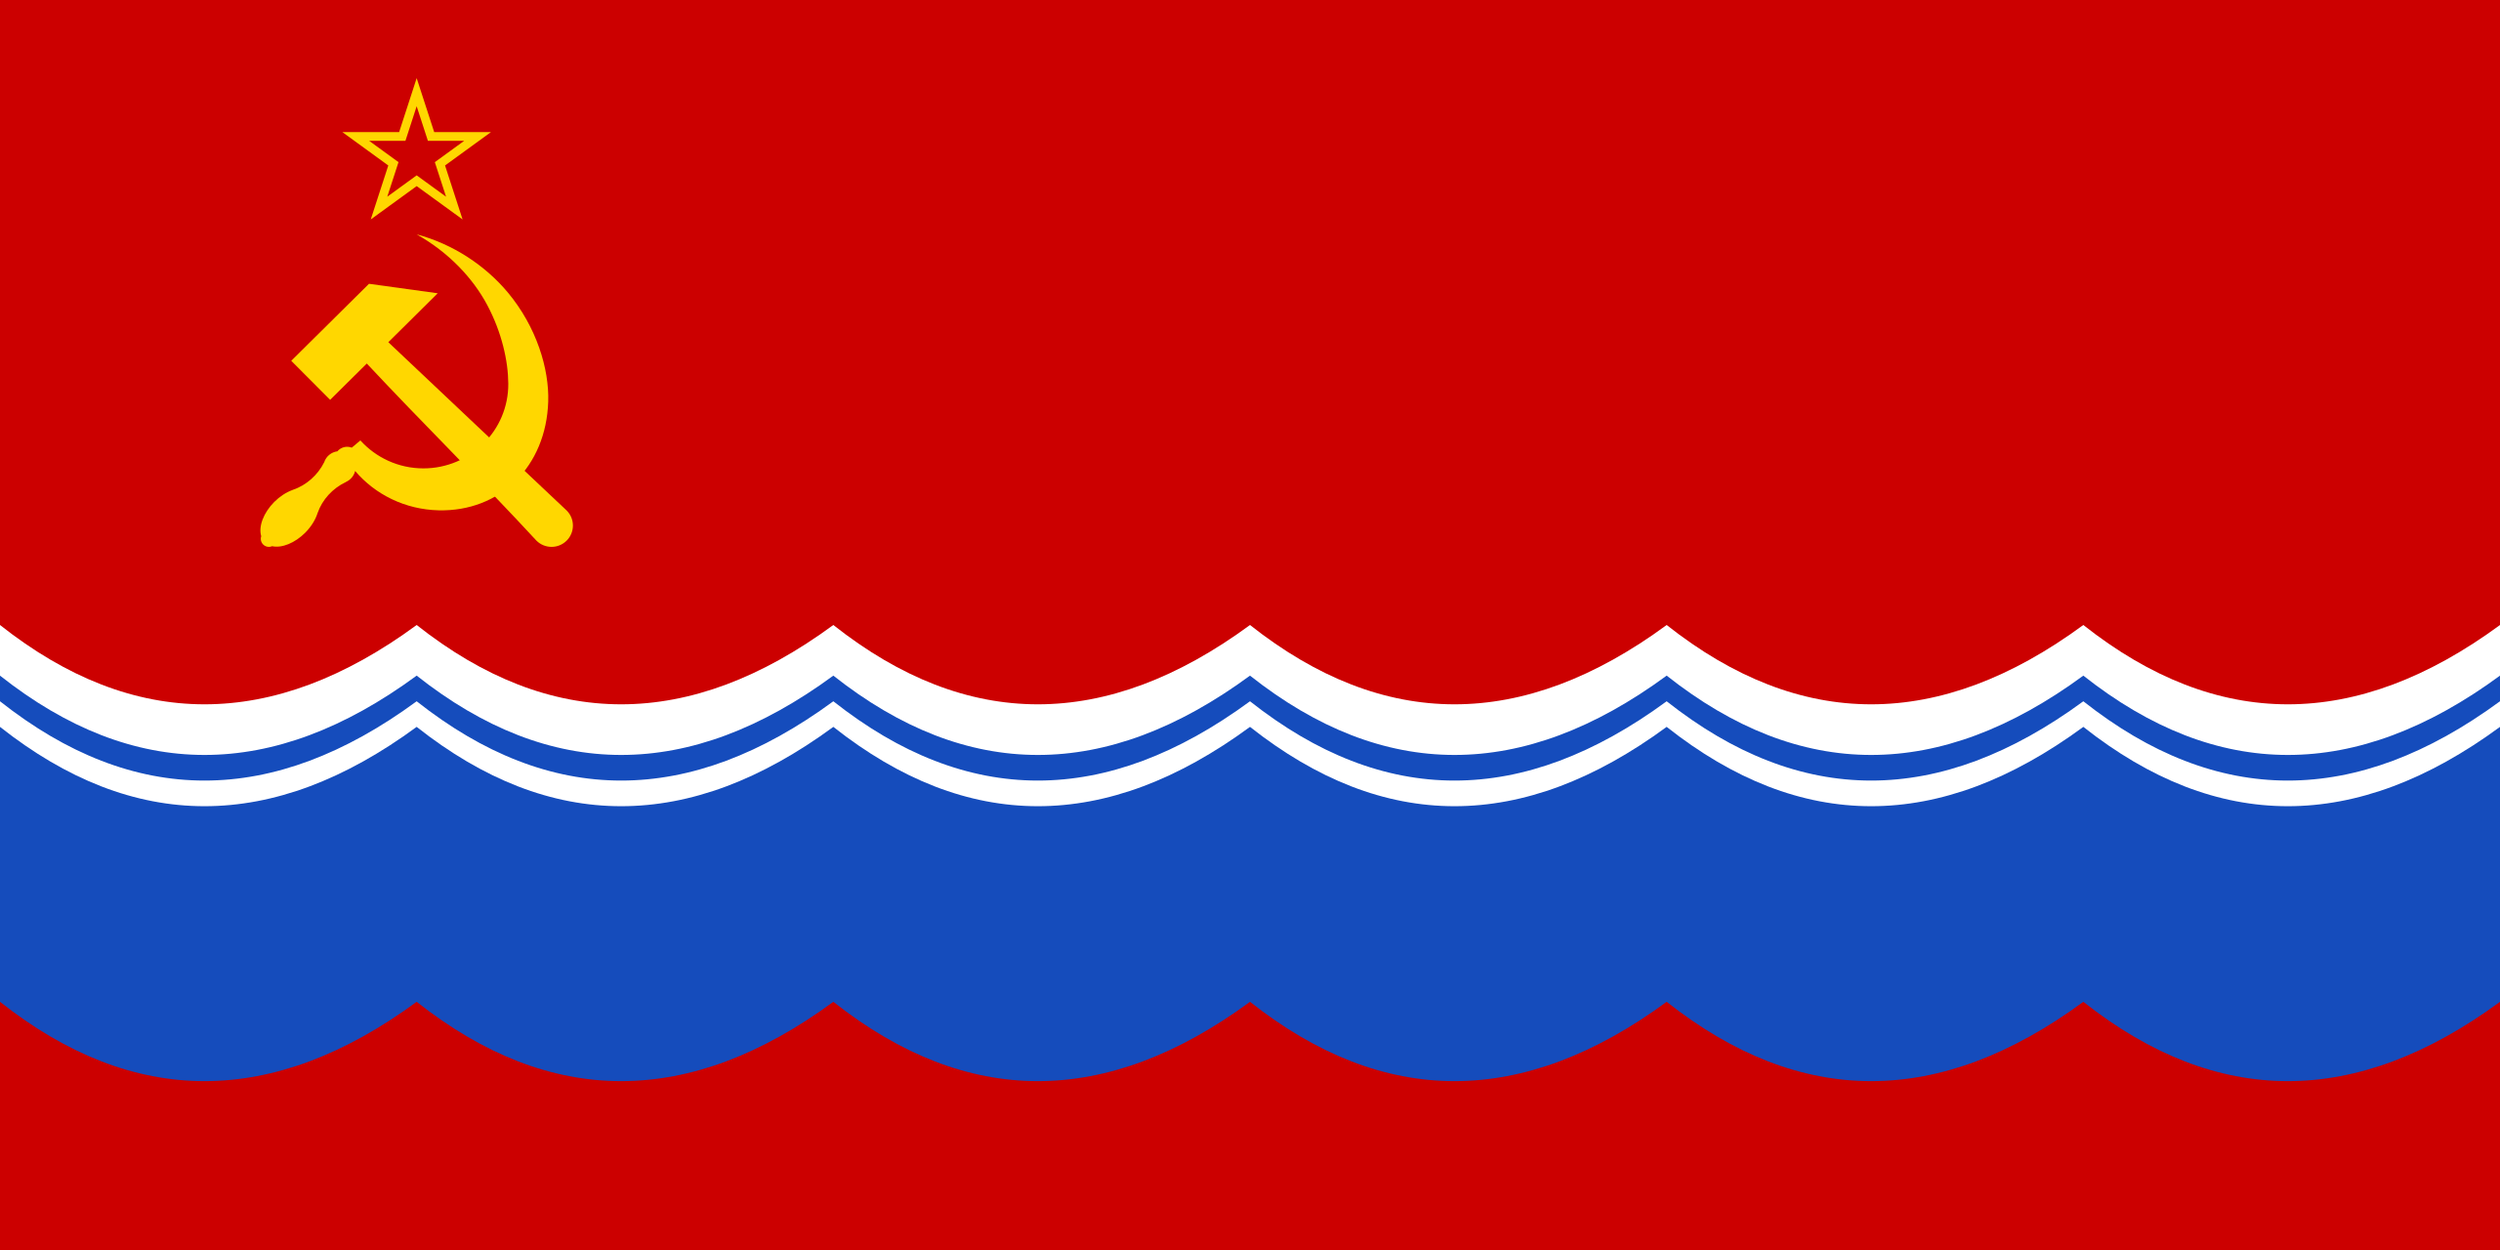 Giant USSR Soviet Union Communist Russian Labour Socialist Red National Flag 